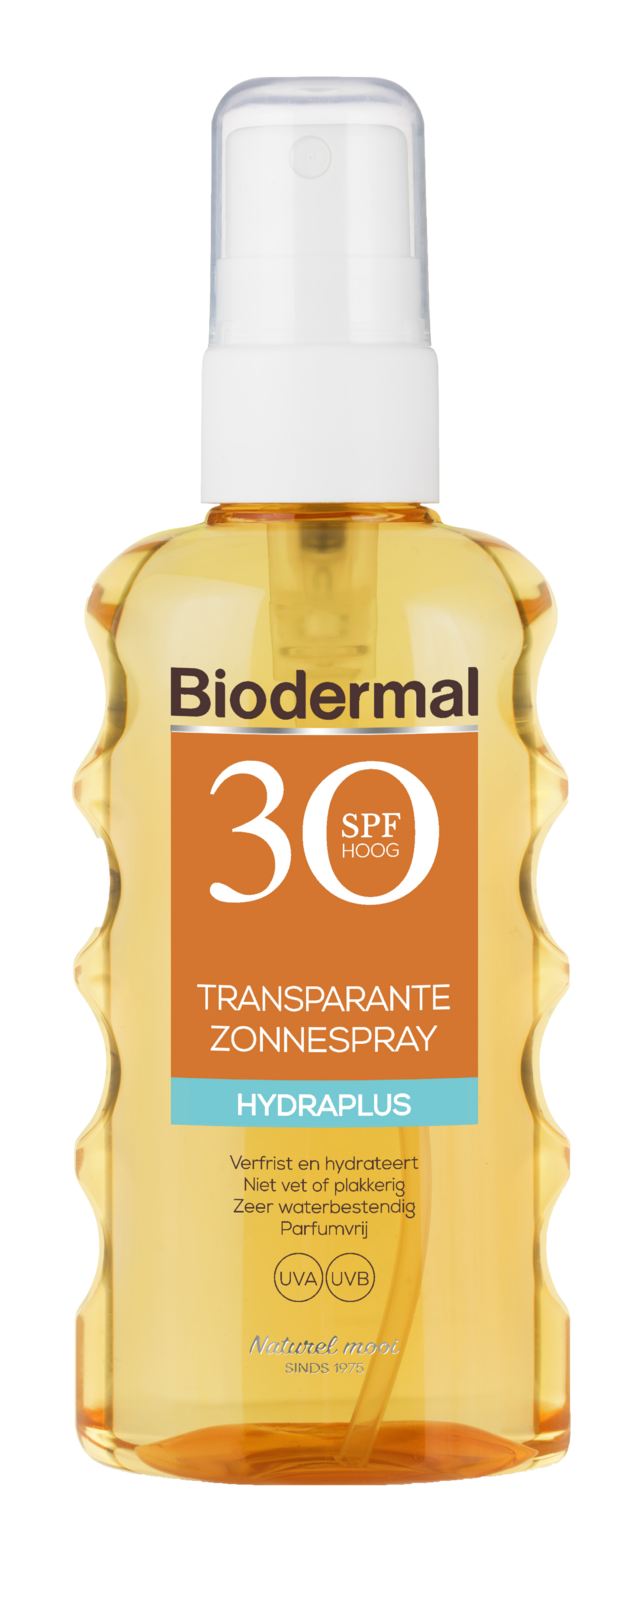 Image of Biodermal Hydraplus Transparante Zonnespray SPF30 